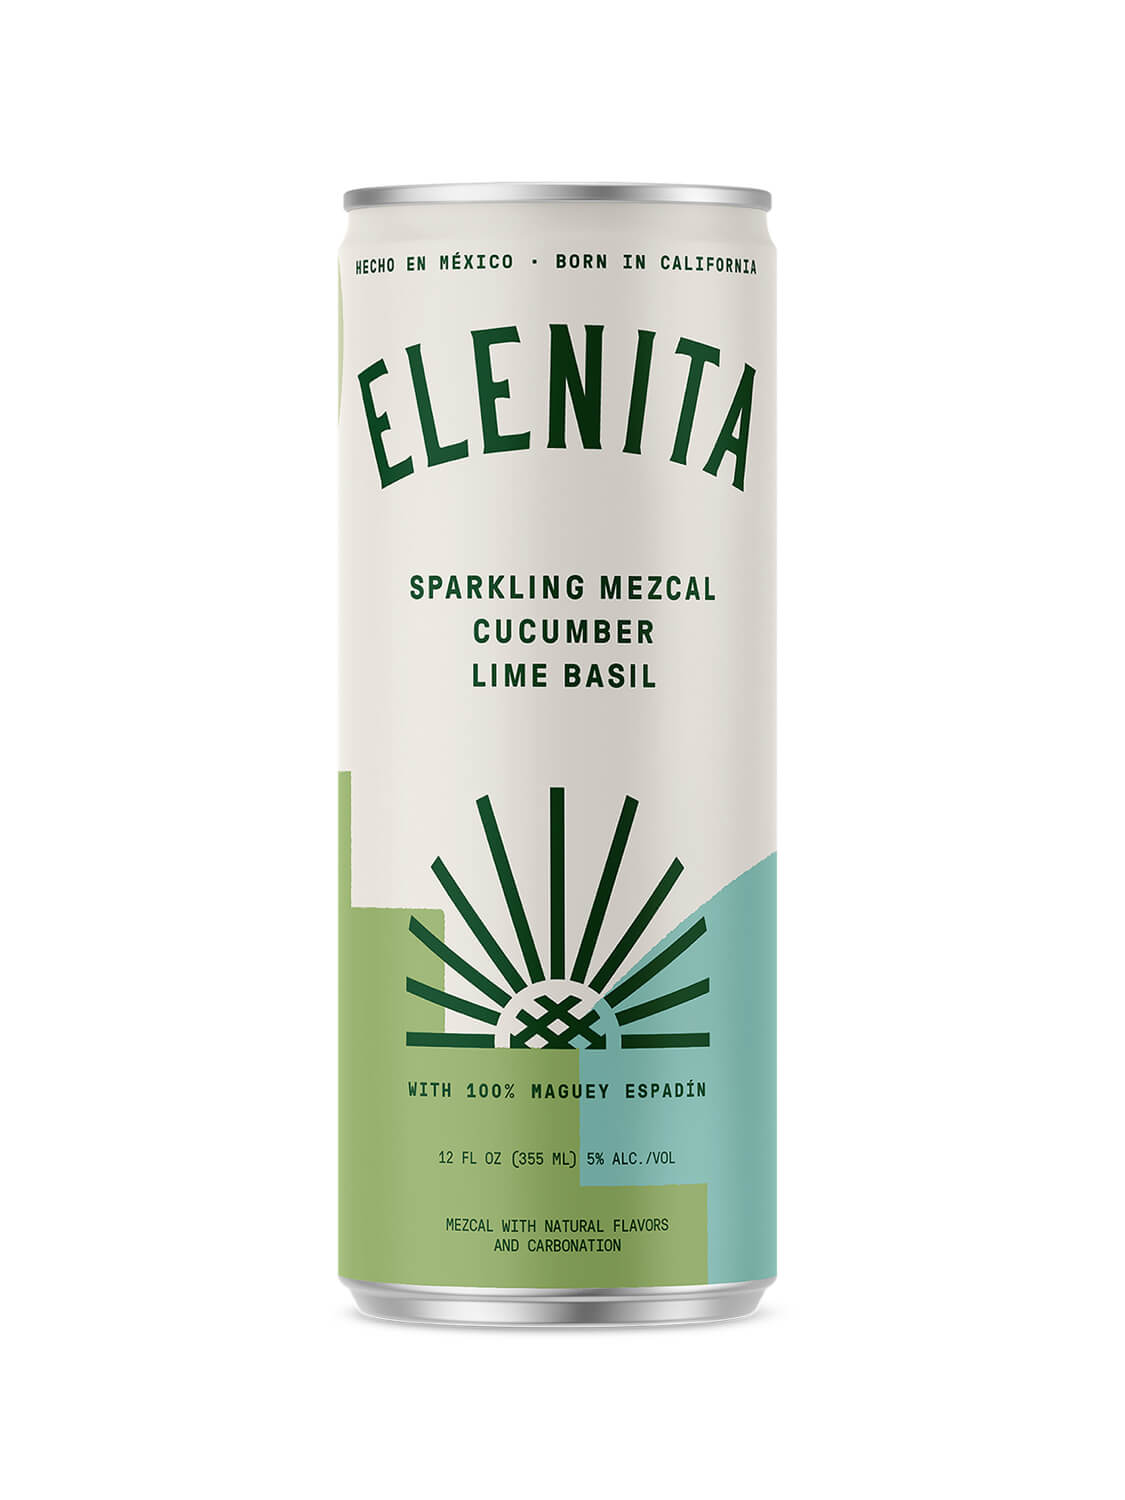 Elenita Sparkling Mezcal Cucumber Lime Basil can